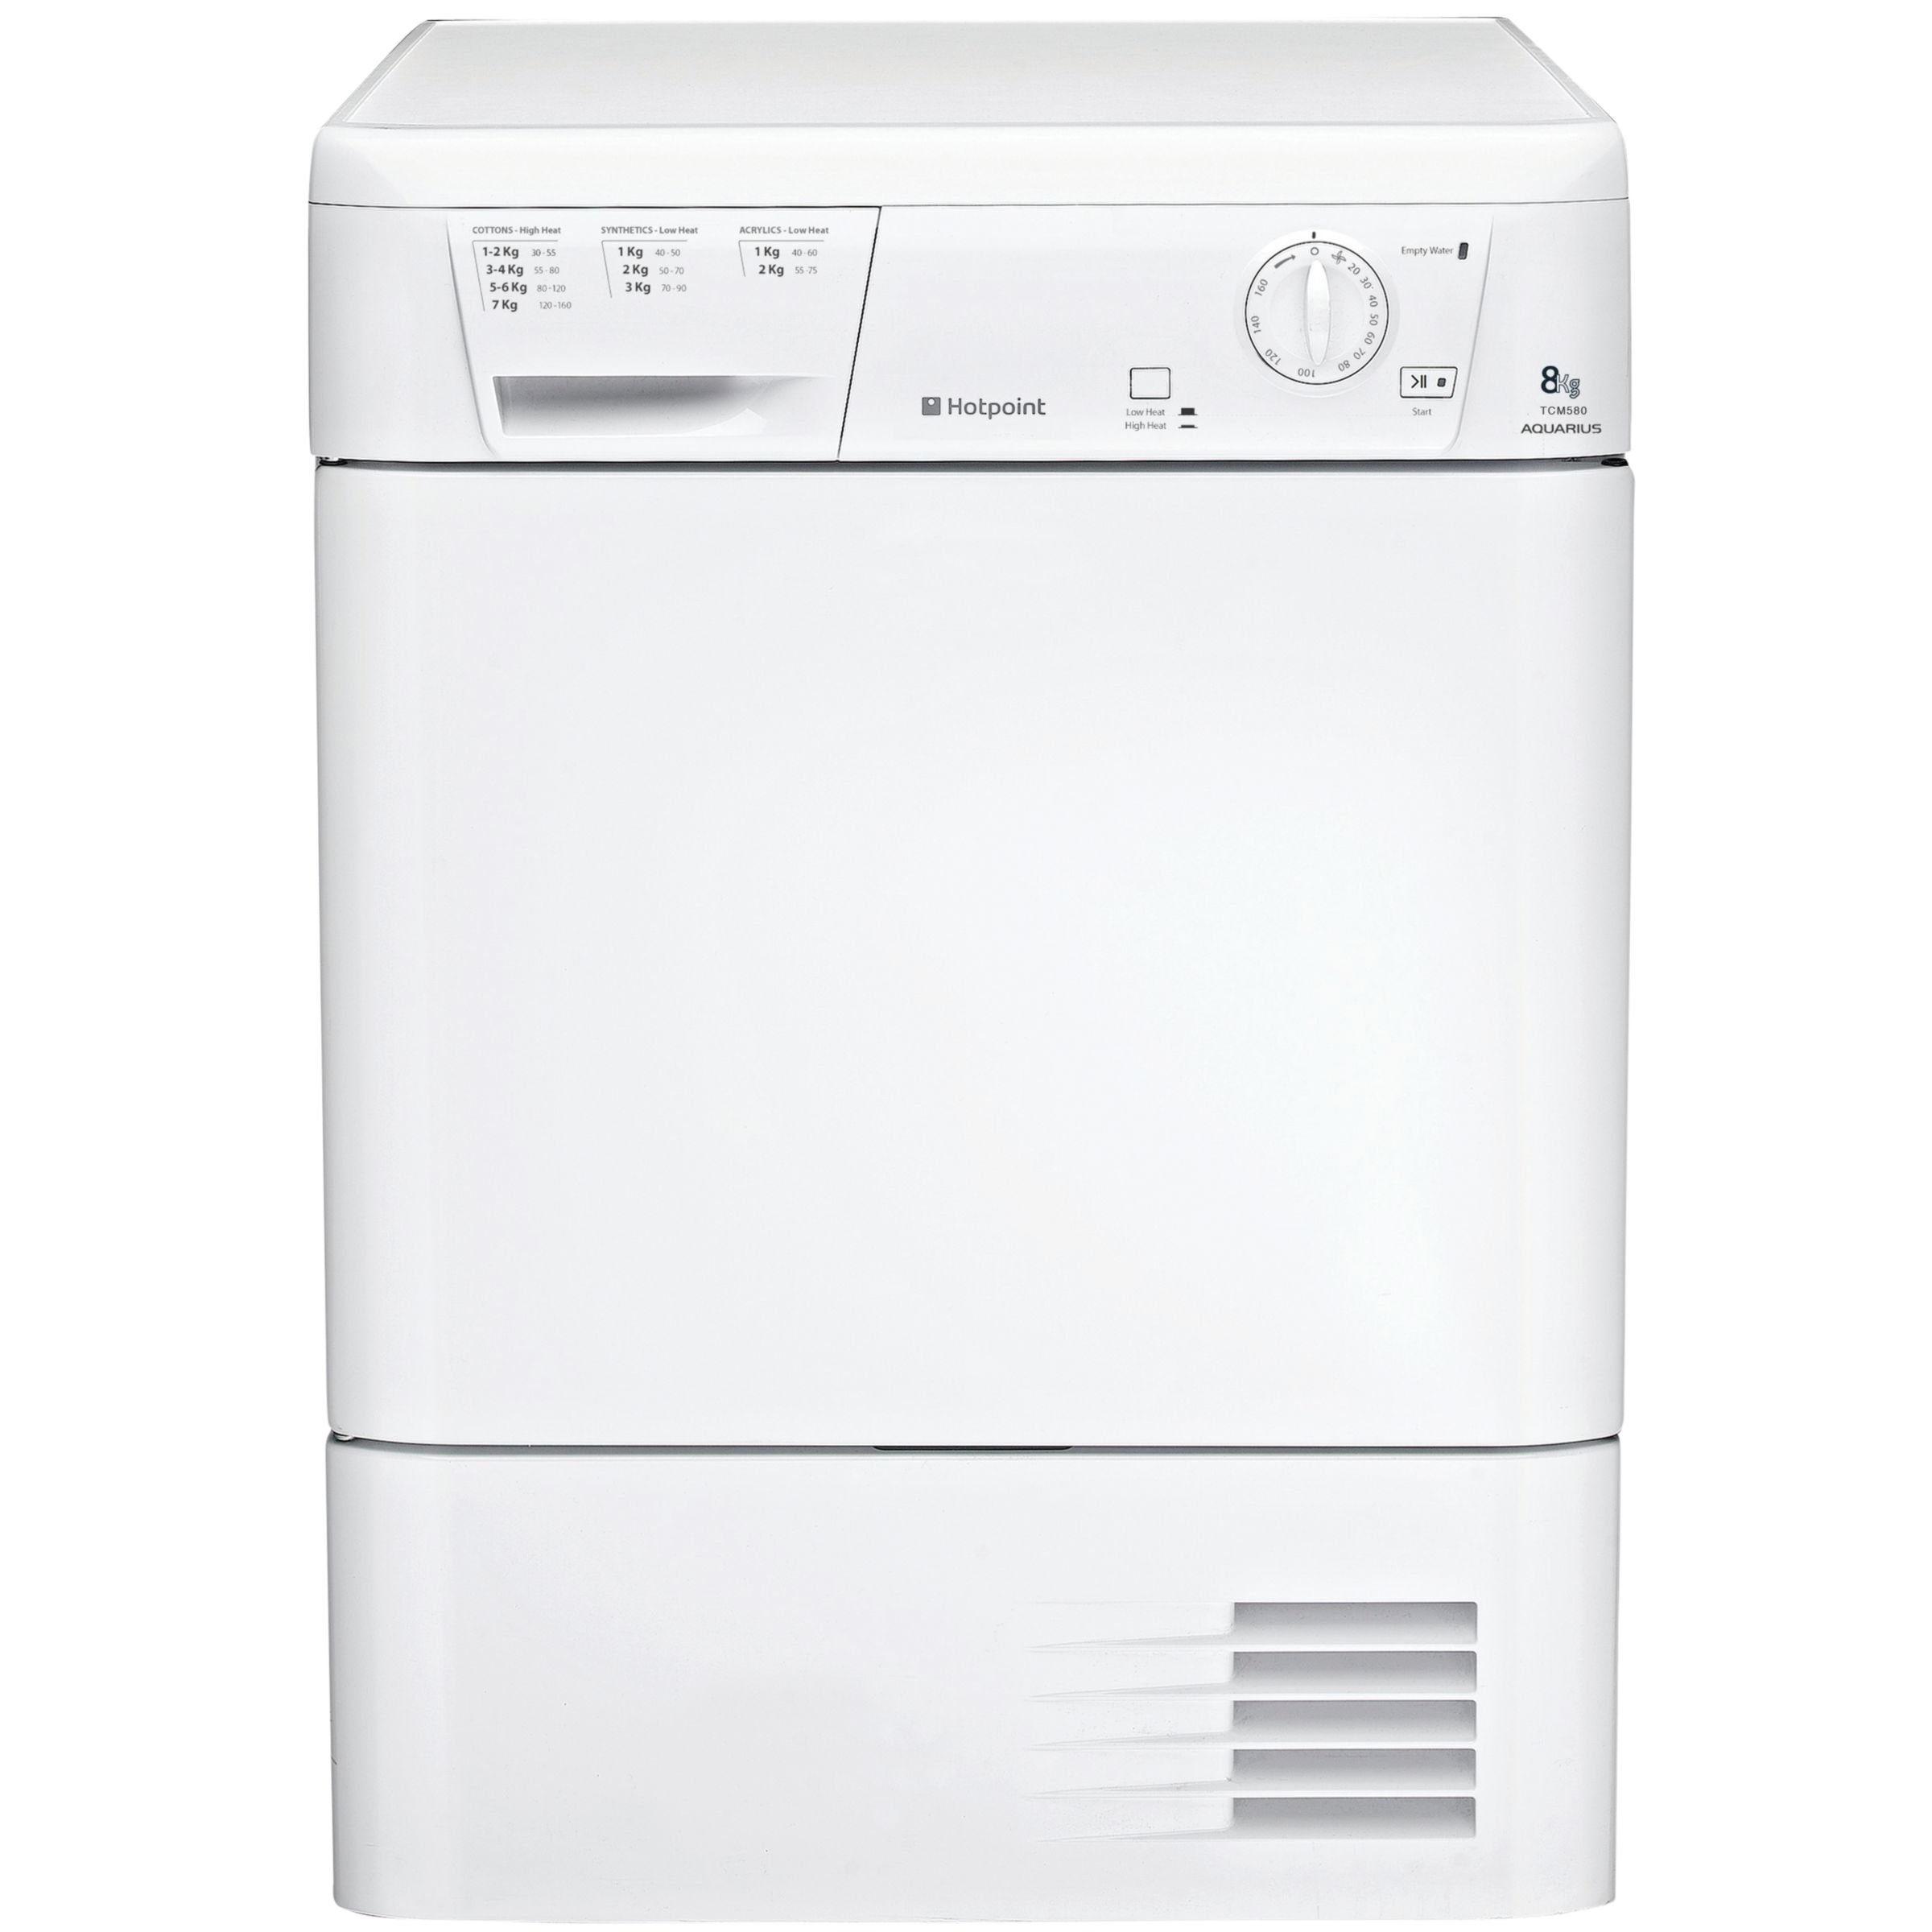 Hotpoint TCM580P Condenser Tumble Dryer, White at John Lewis